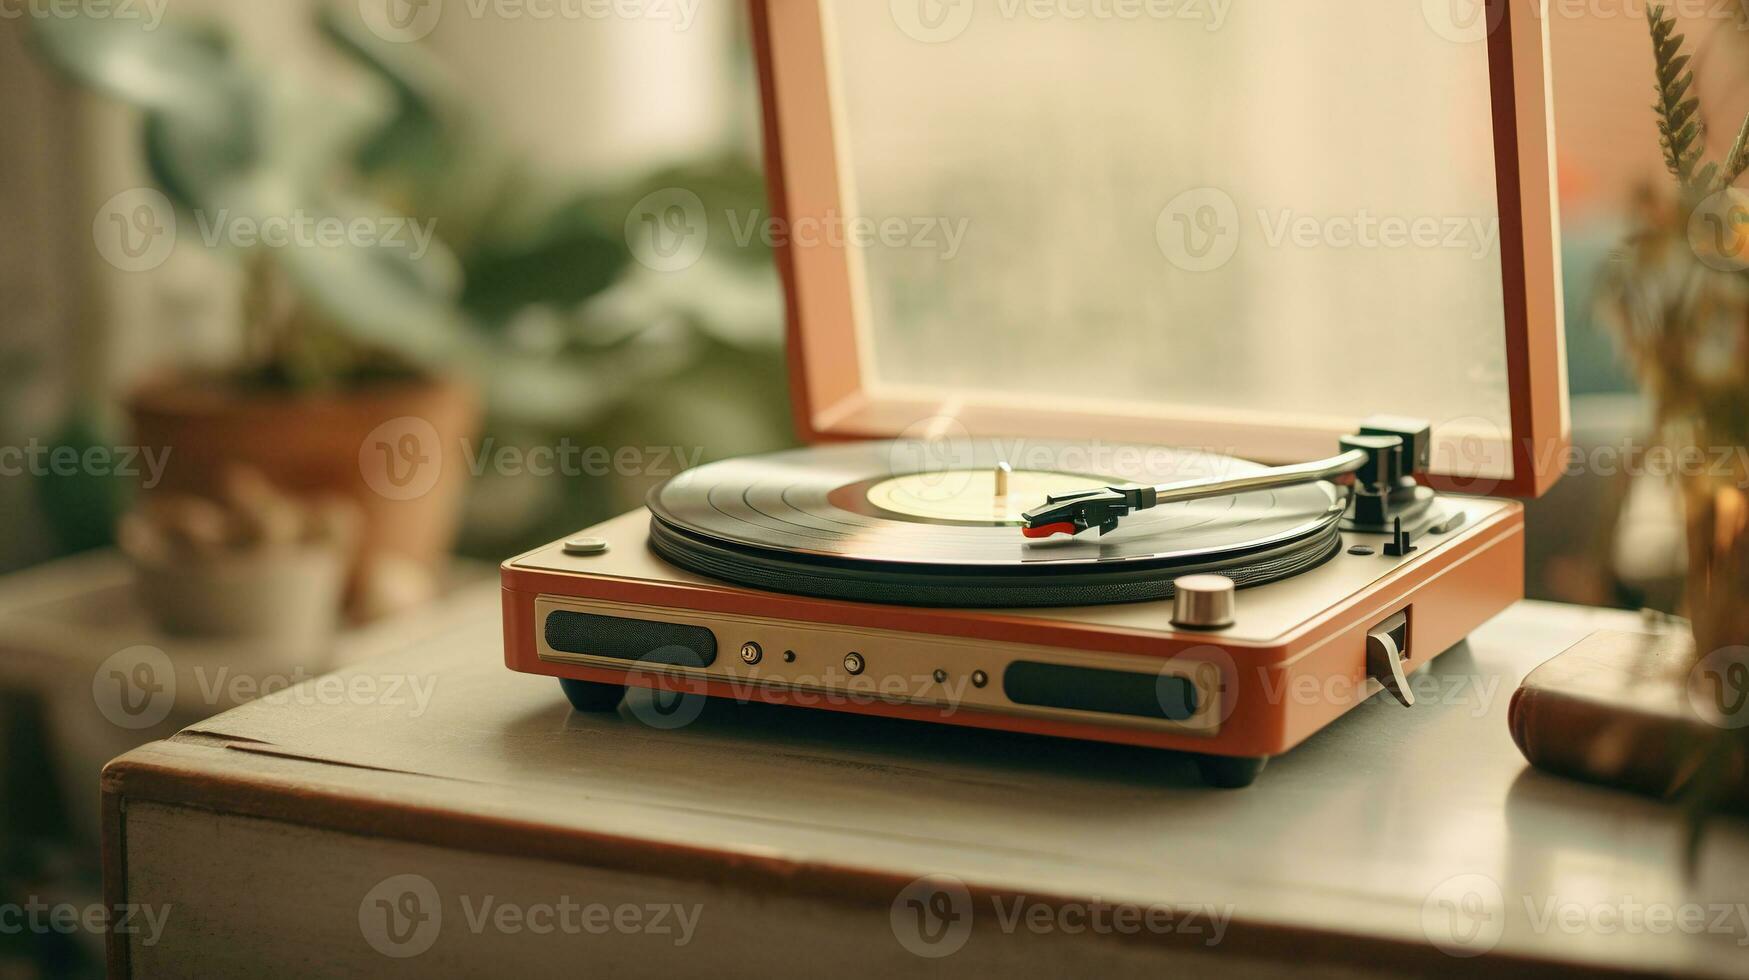 AI generated Generative AI, nostalgic retro vinyl recorder, vintage turntable player, muted colors, aesthetic photo